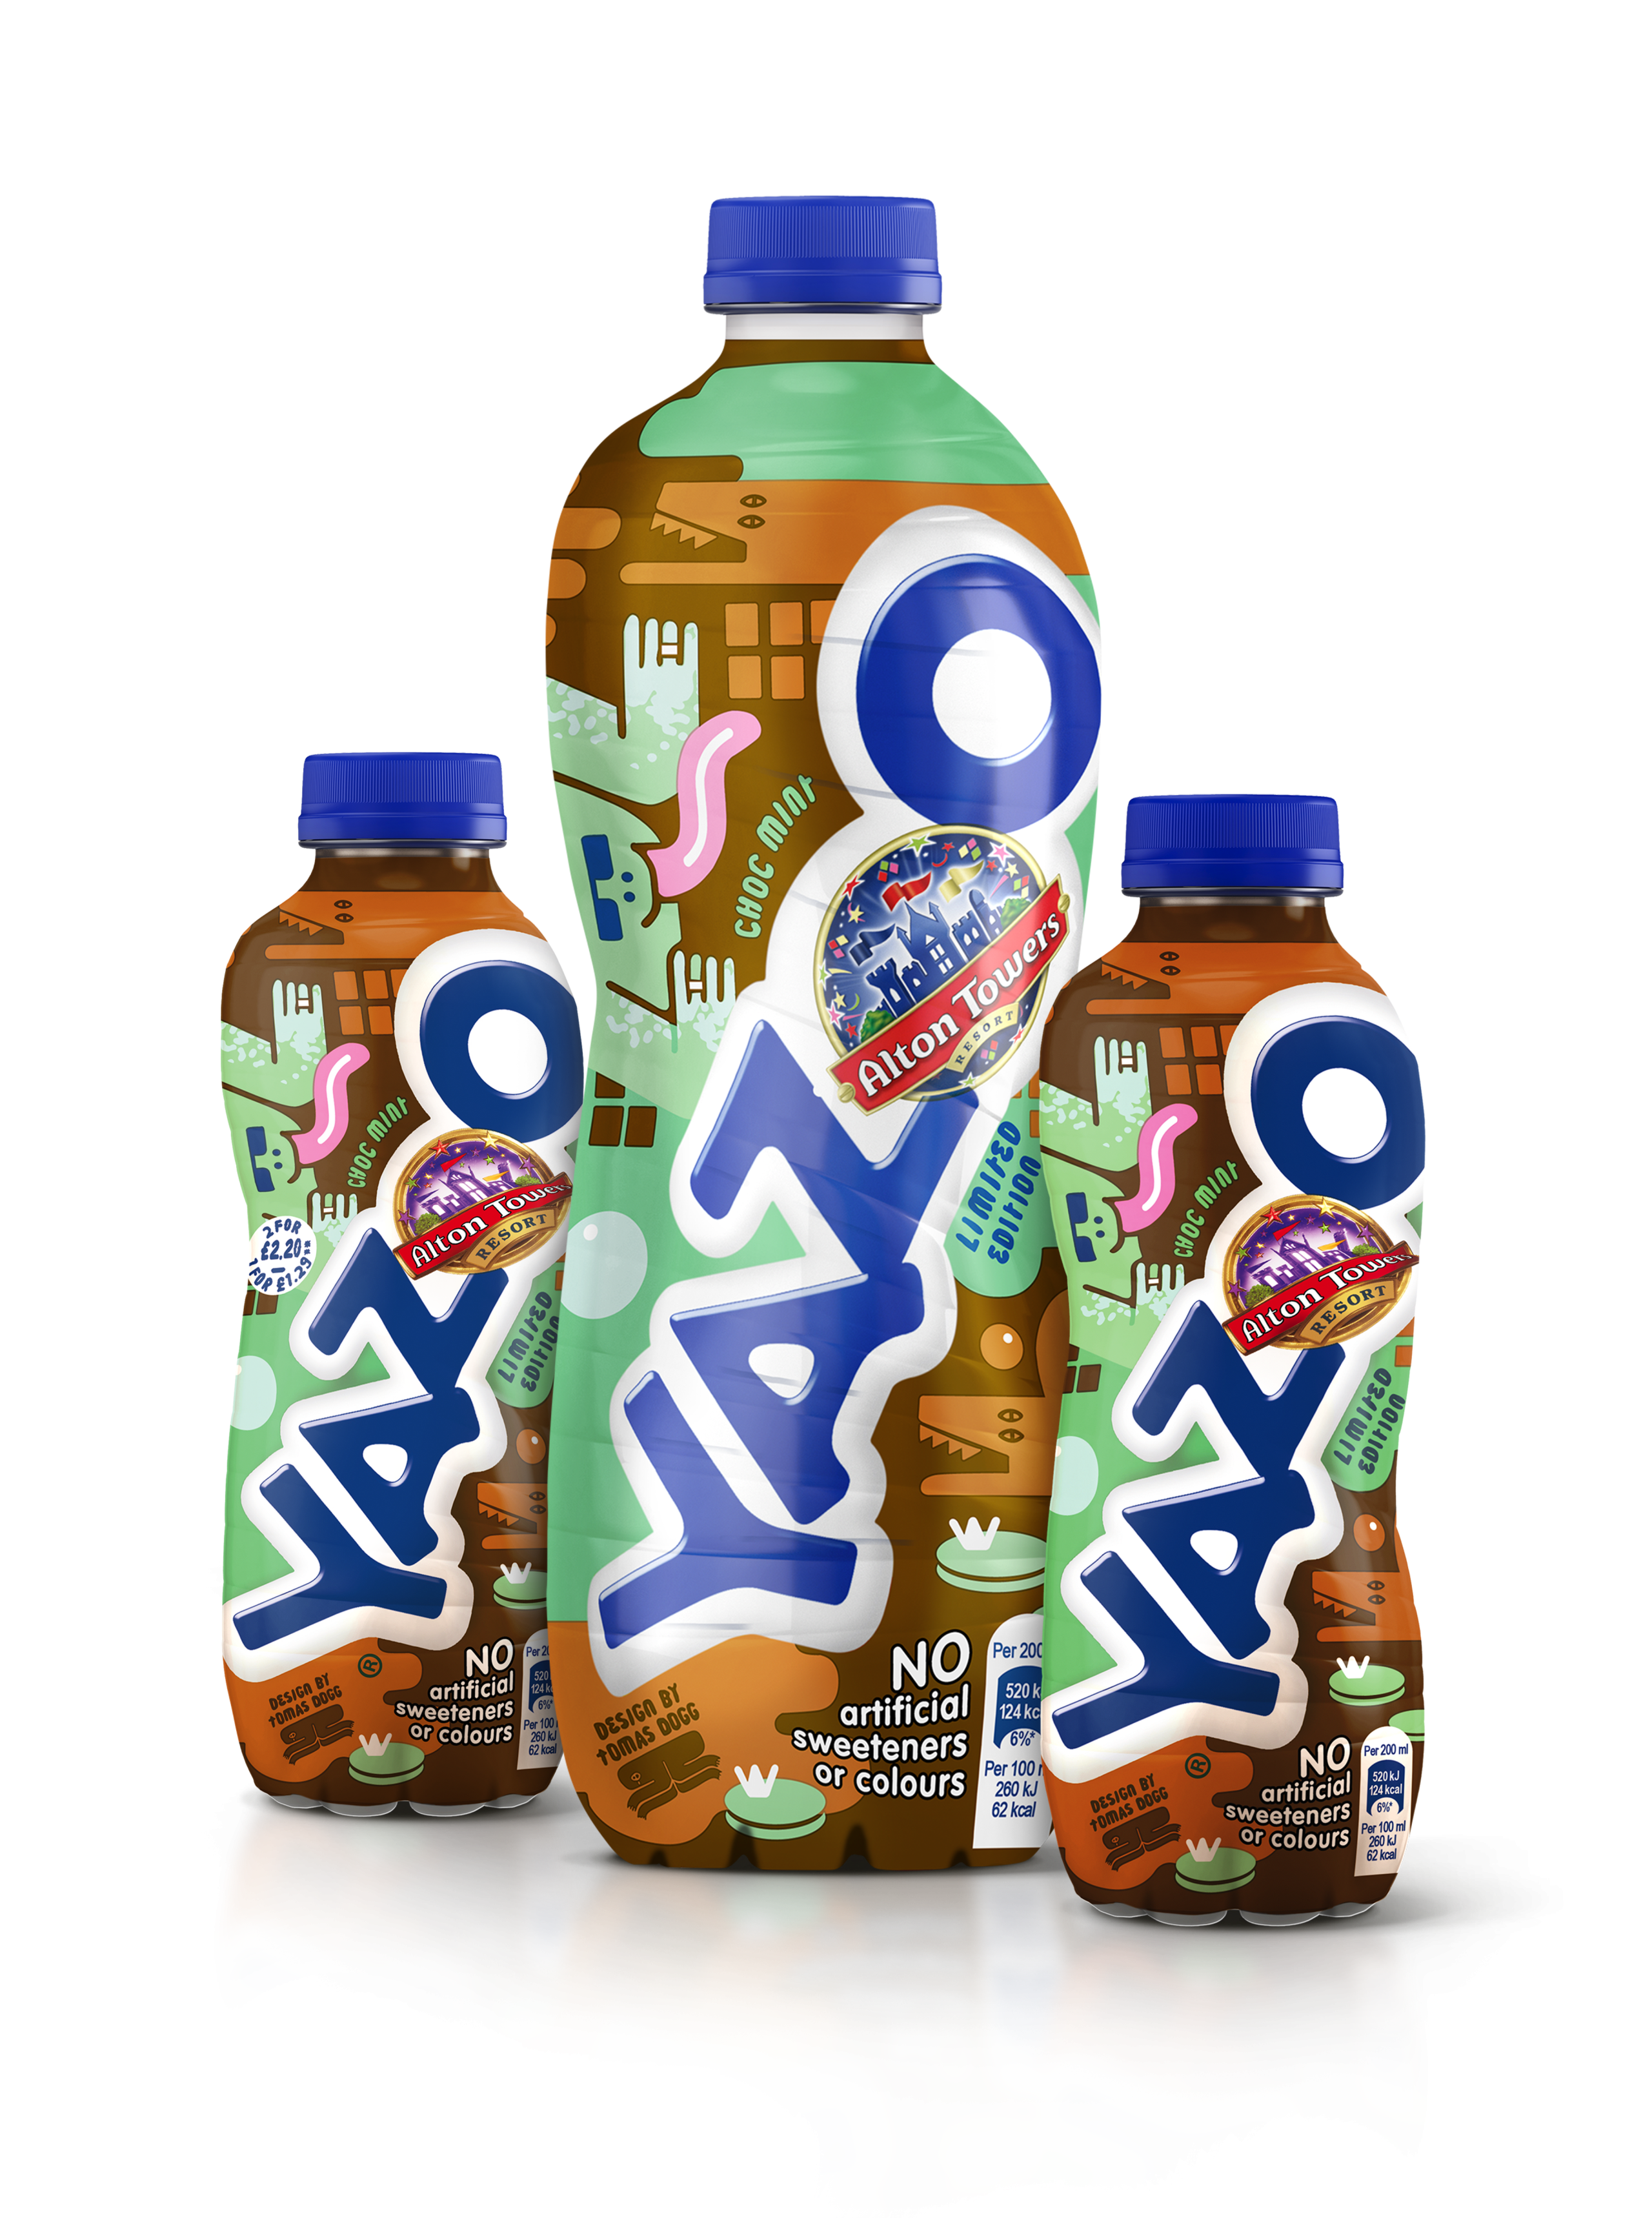 YAZOO Choc Mint returns due to popular demand